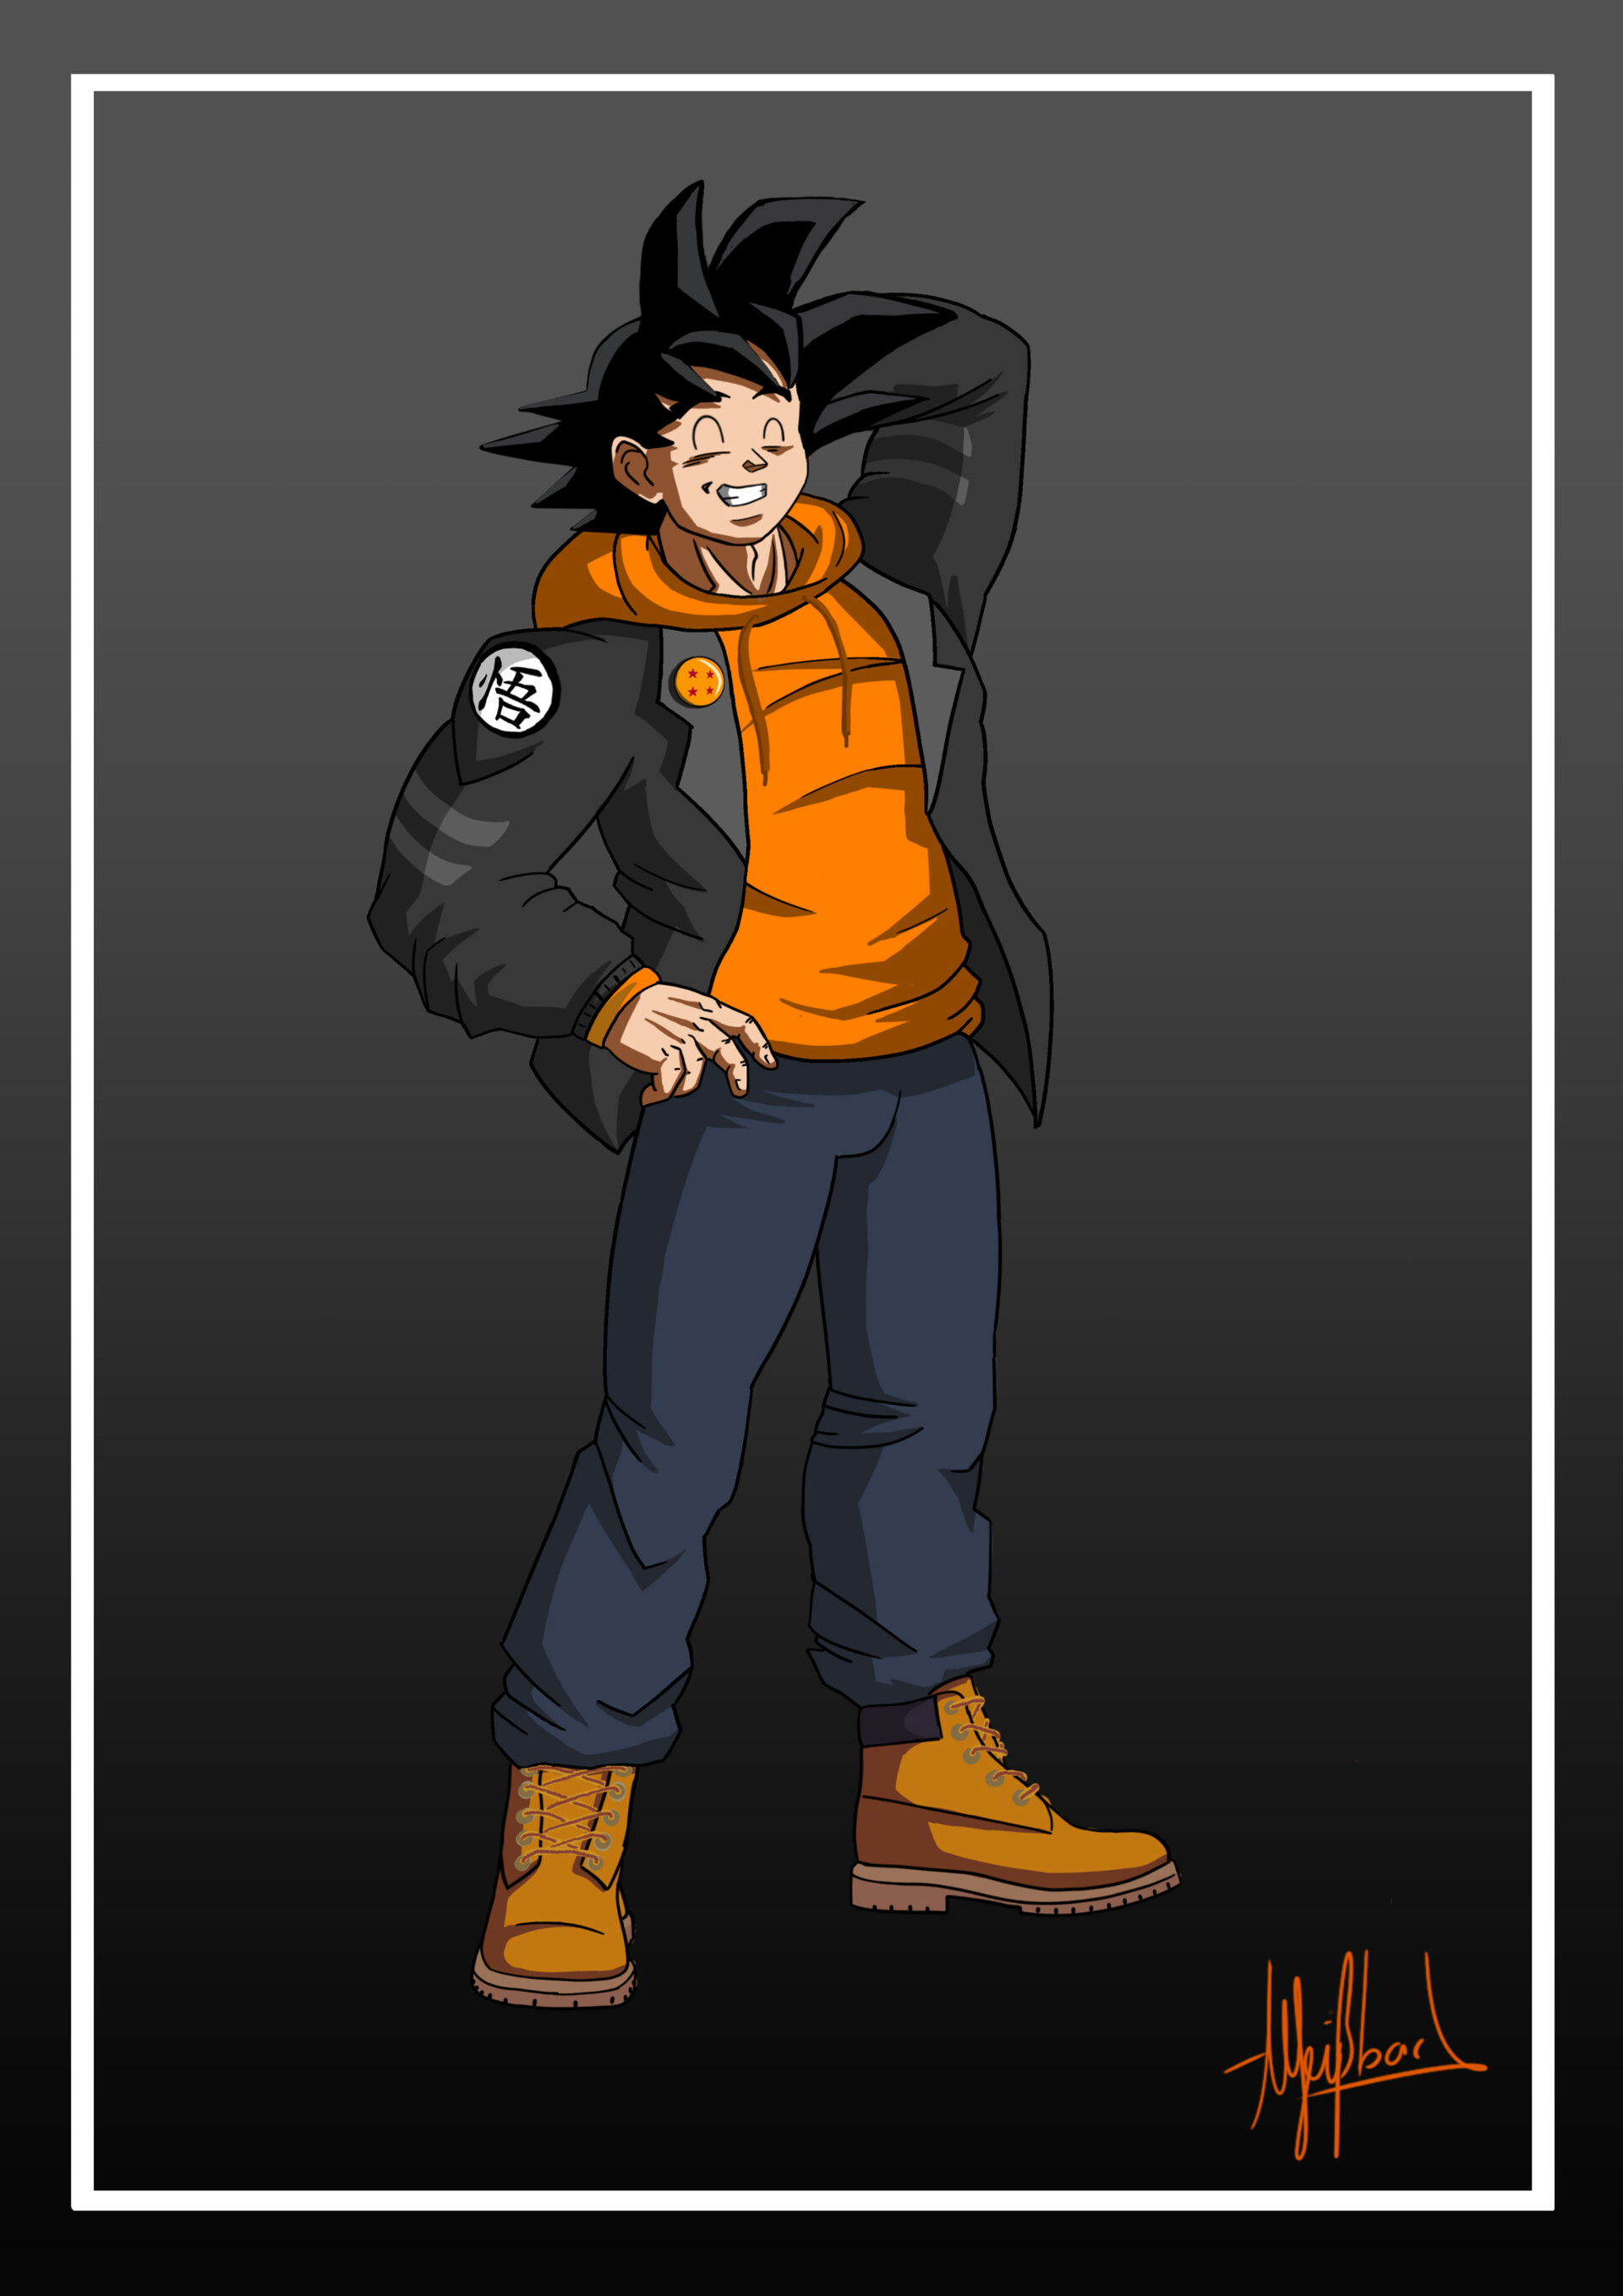 ArtStation - Goku casual outfit